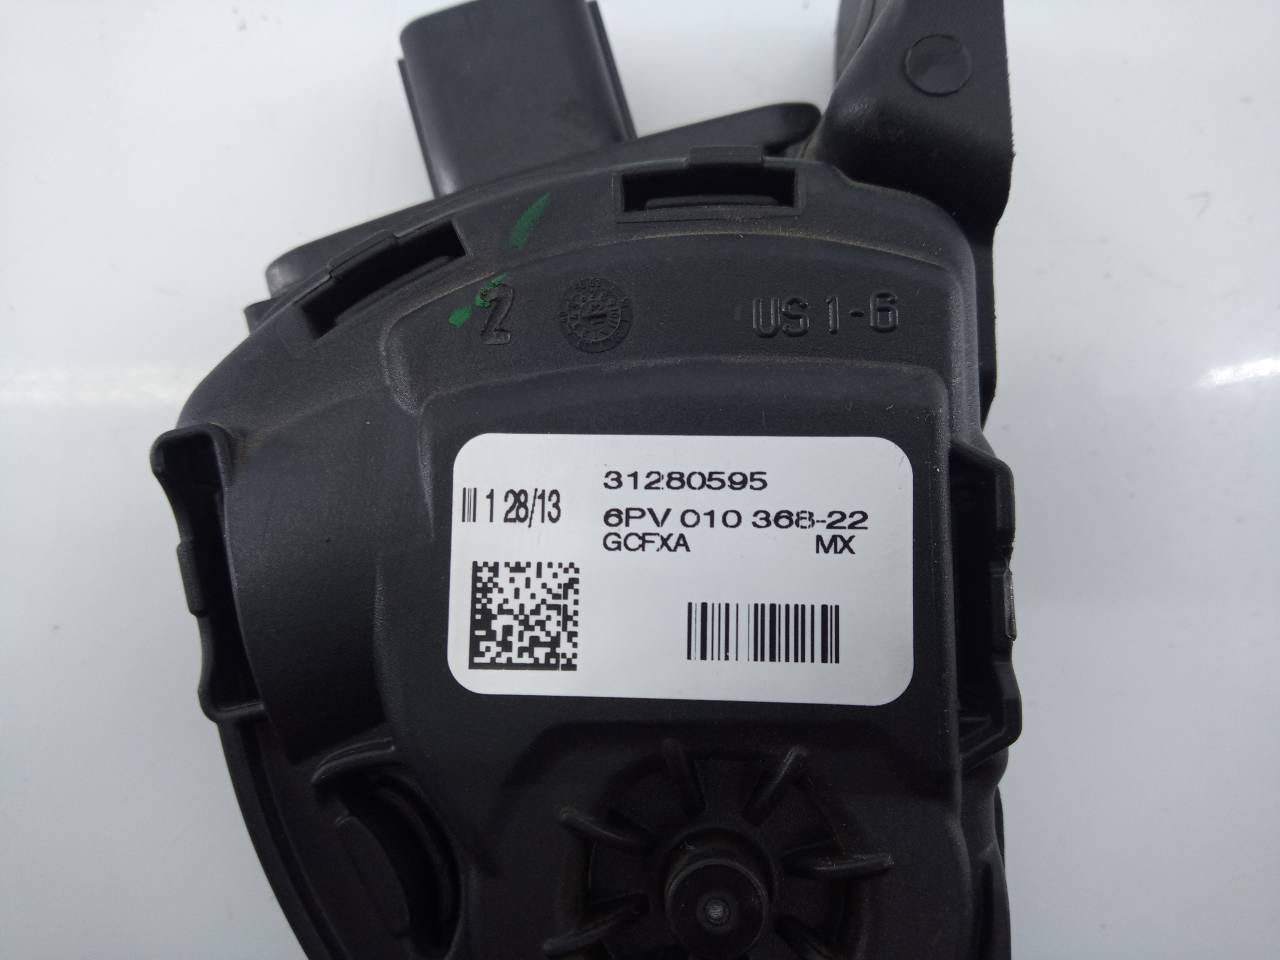 VOLVO V40 2 generation (2012-2020) Throttle Pedal 31280595, 6PV01036822, E3-B5-44-4 20961262